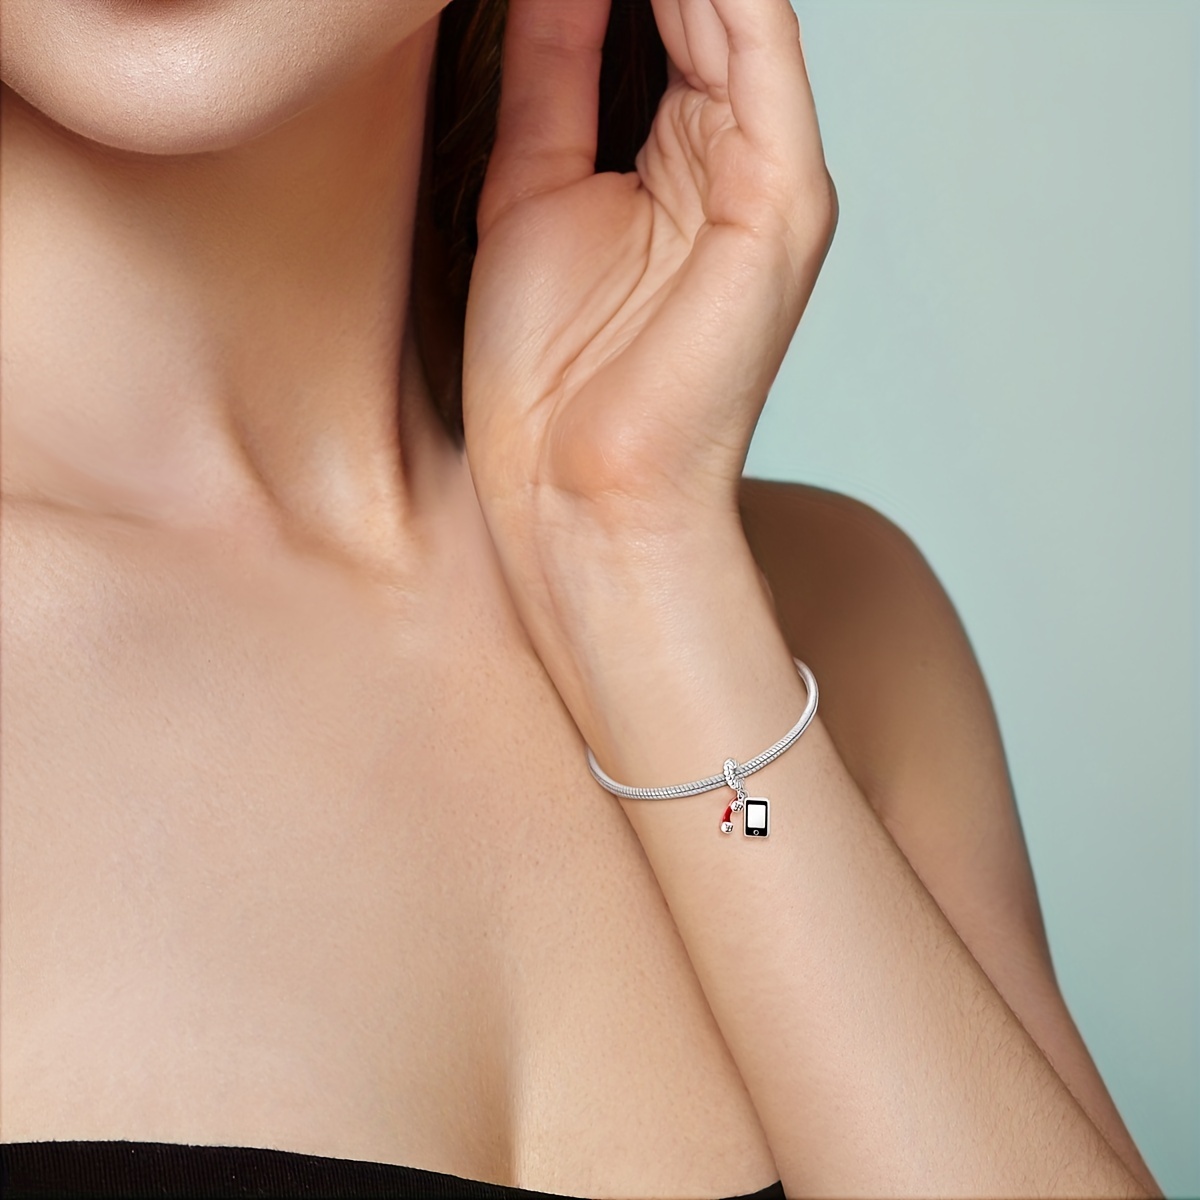 Heart Charm Bracelet Design Quartz Watch | SHEIN